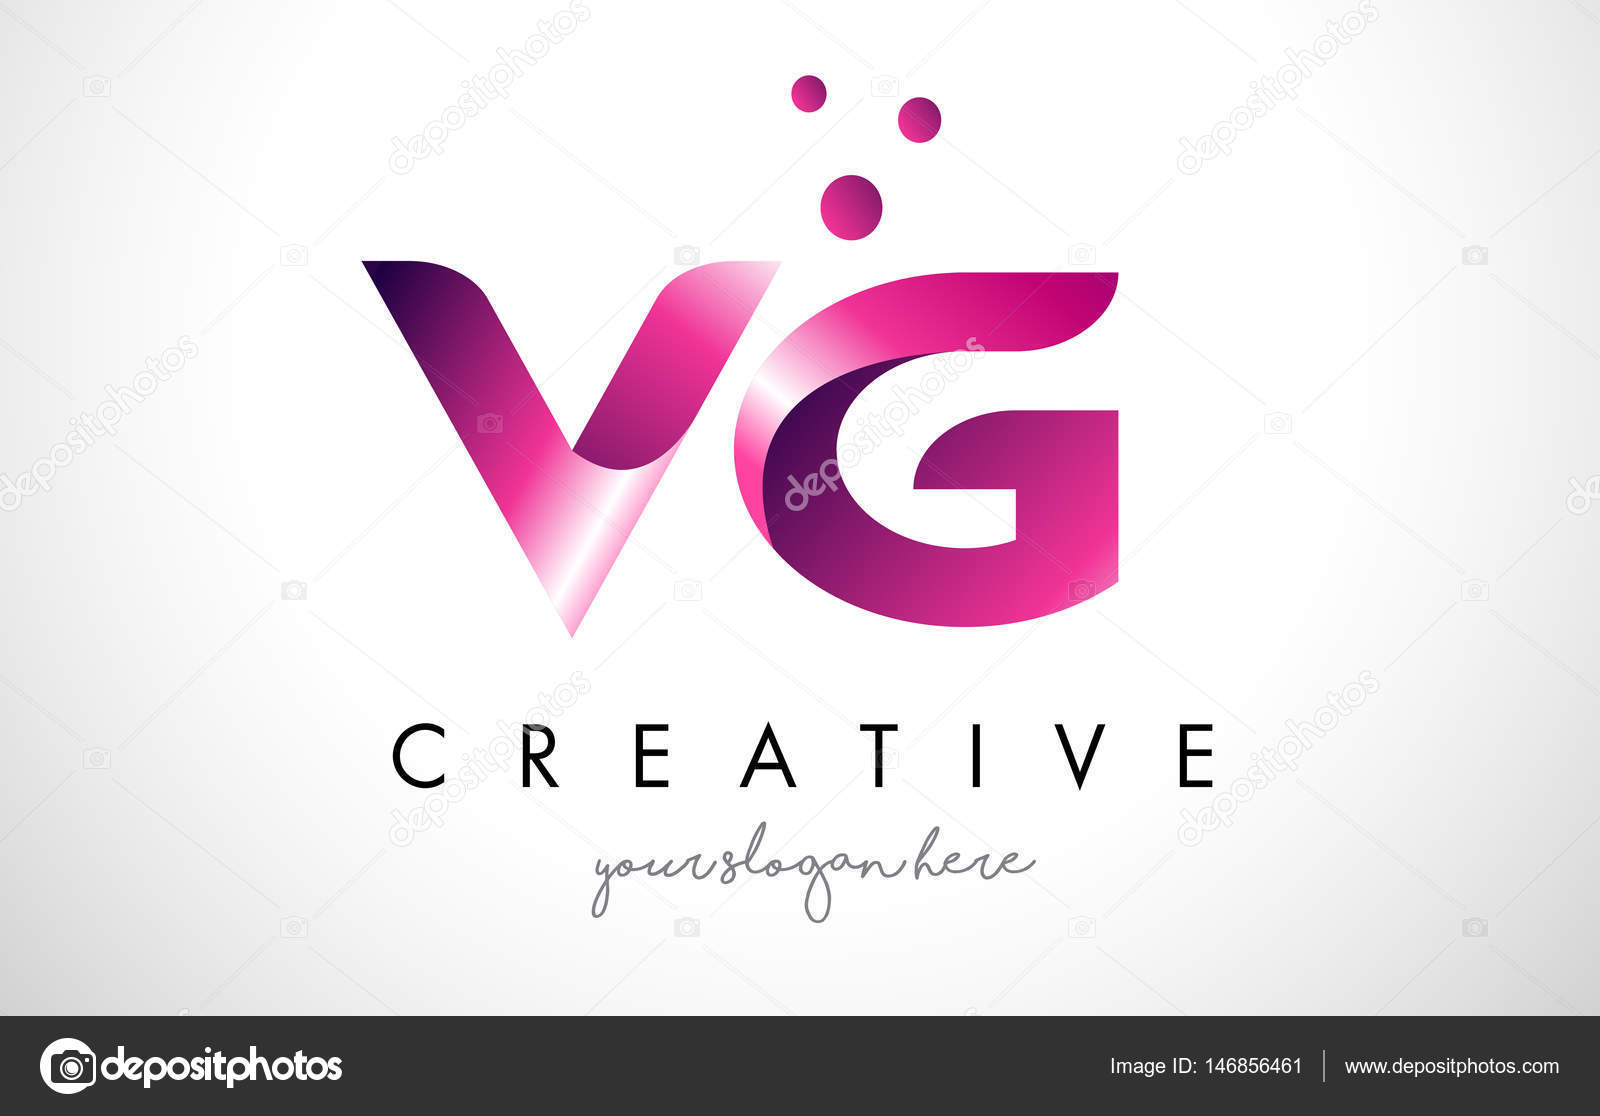 1 406 Vg Logo Vector Images Vg Logo Illustrations Depositphotos